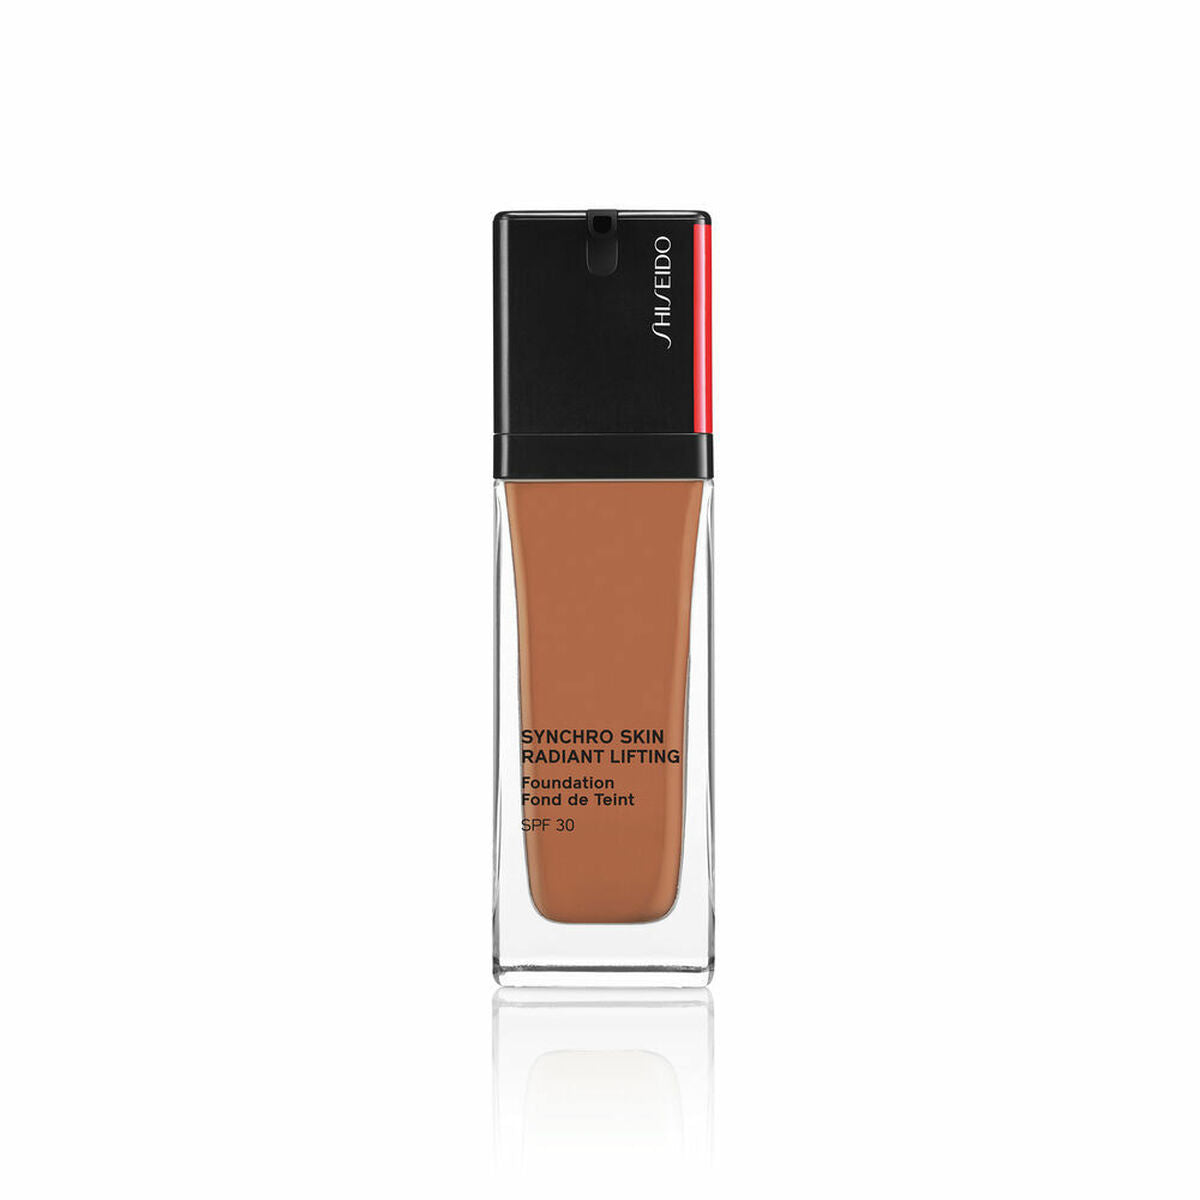 Liquide maquillage base synchro peau rayonnant soulevant Shiseido 730852167544 (30 ml)